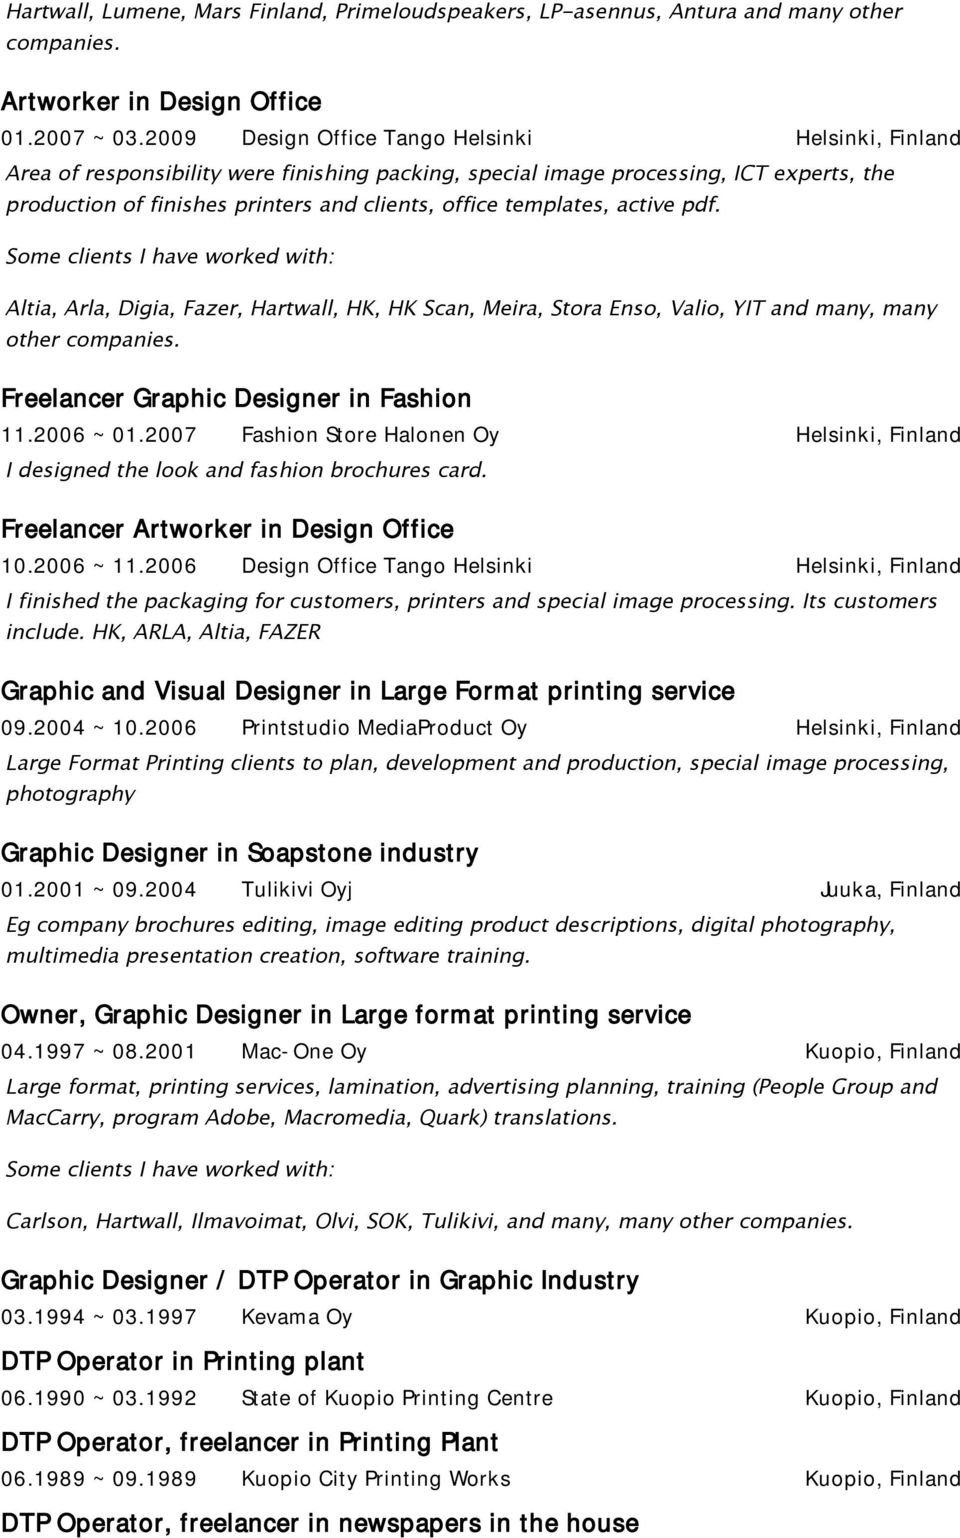 templates, active pdf. Altia, Arla, Digia, Fazer, Hartwall, HK, HK Scan, Meira, Stora Enso, Valio, YIT and many, many other companies. Freelancer Graphic Designer in Fashion 11.2006 ~ 01.